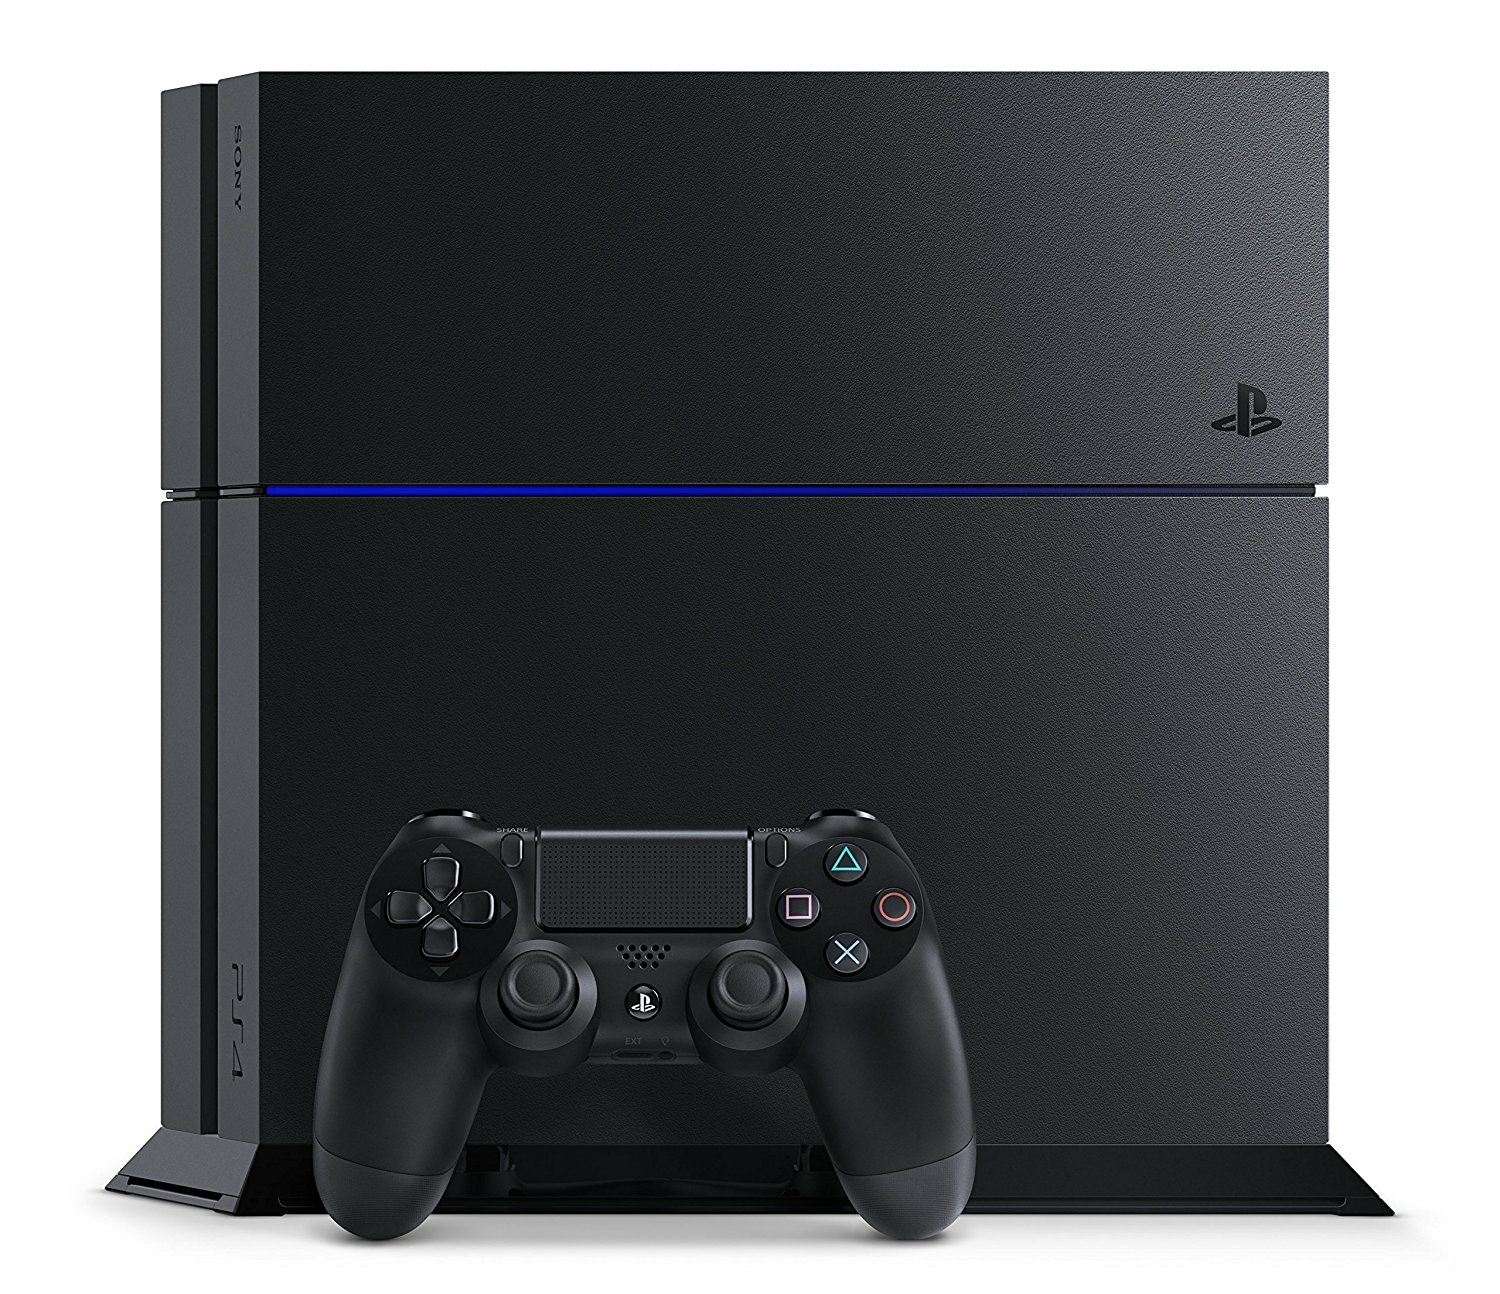 Console PlayStation 4 (CUH-1200) - 500 Go : Référence Gaming